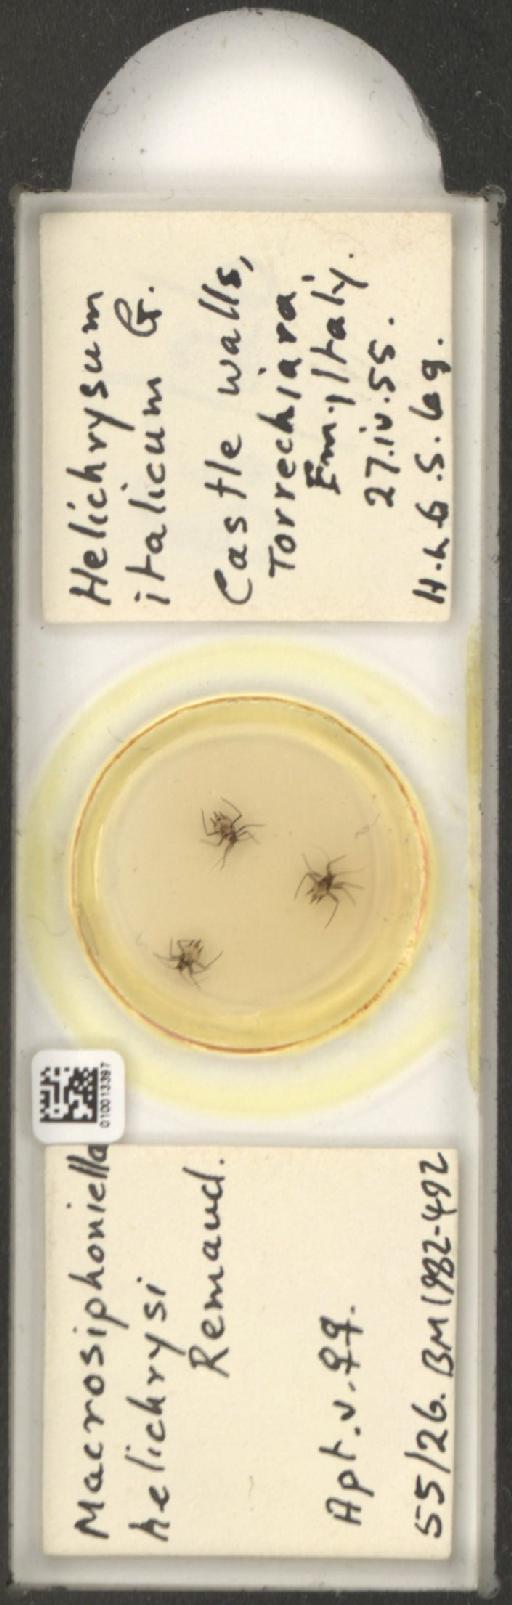 Macrosiphoniella helichrysi Remaudiere, 1952 - 010013397_112660_1094725